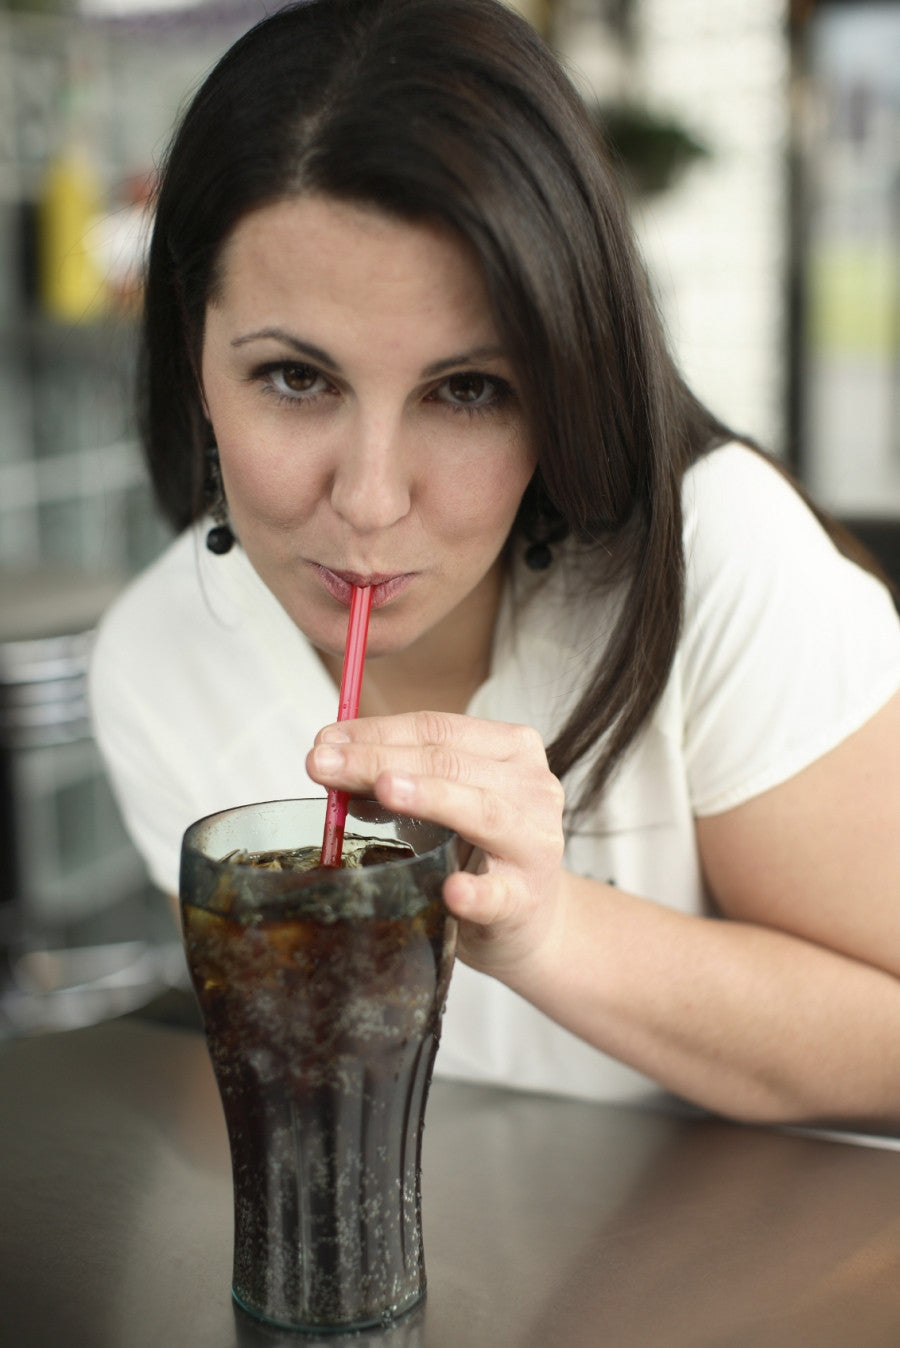 Brush On Block image of woman drinking soda through a straw